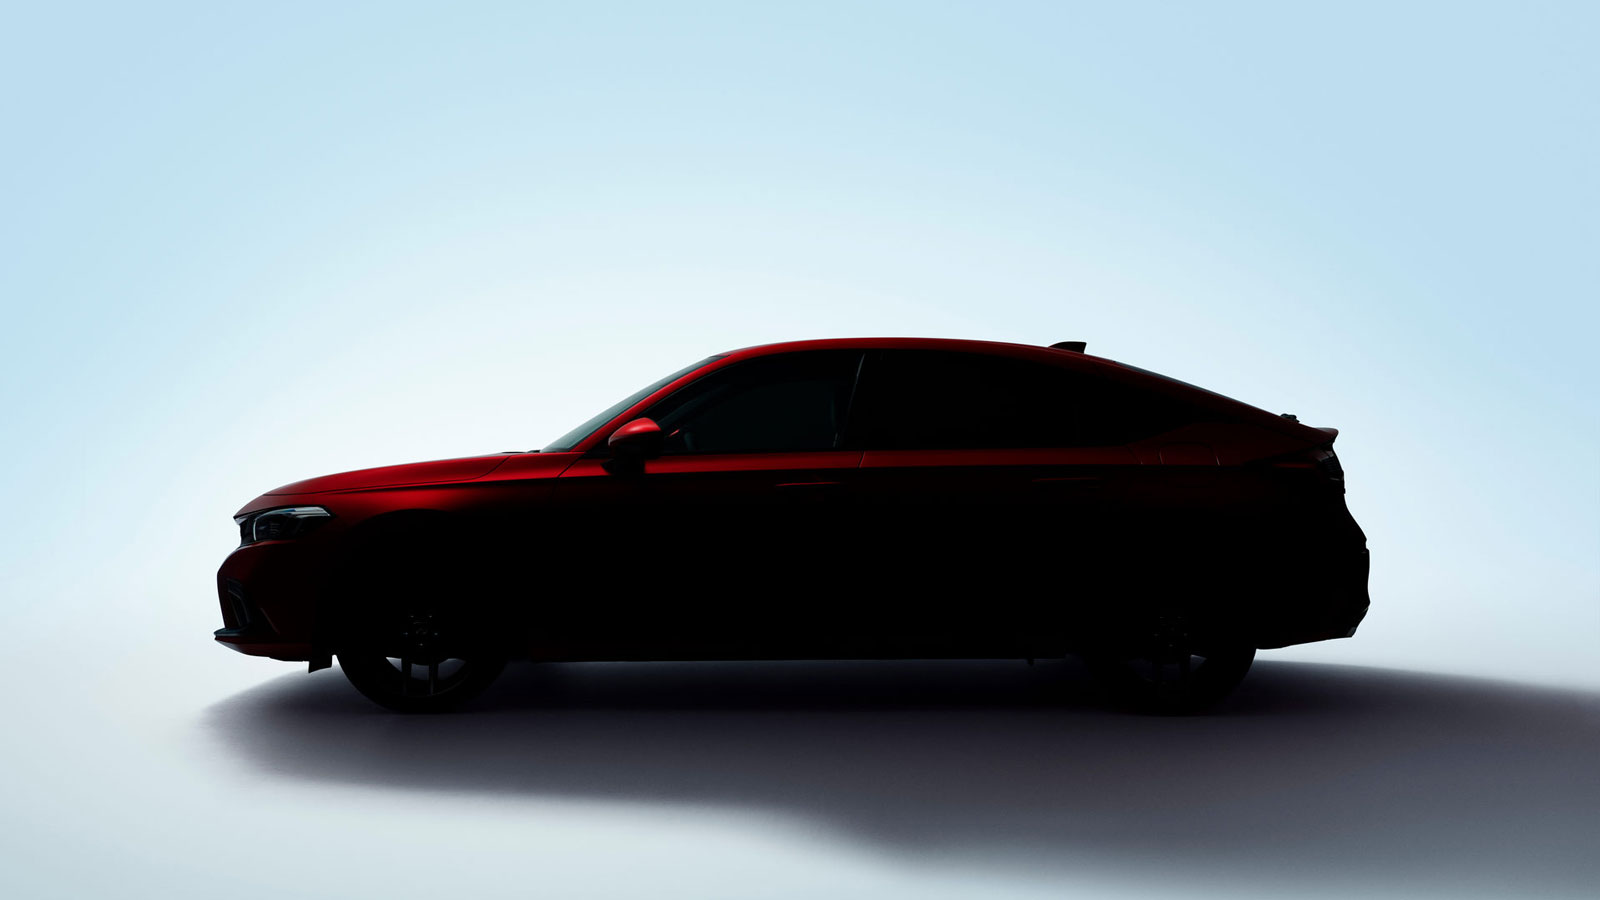 Honda Civic Hatchback: Ιδού οι πρώτες εικόνες